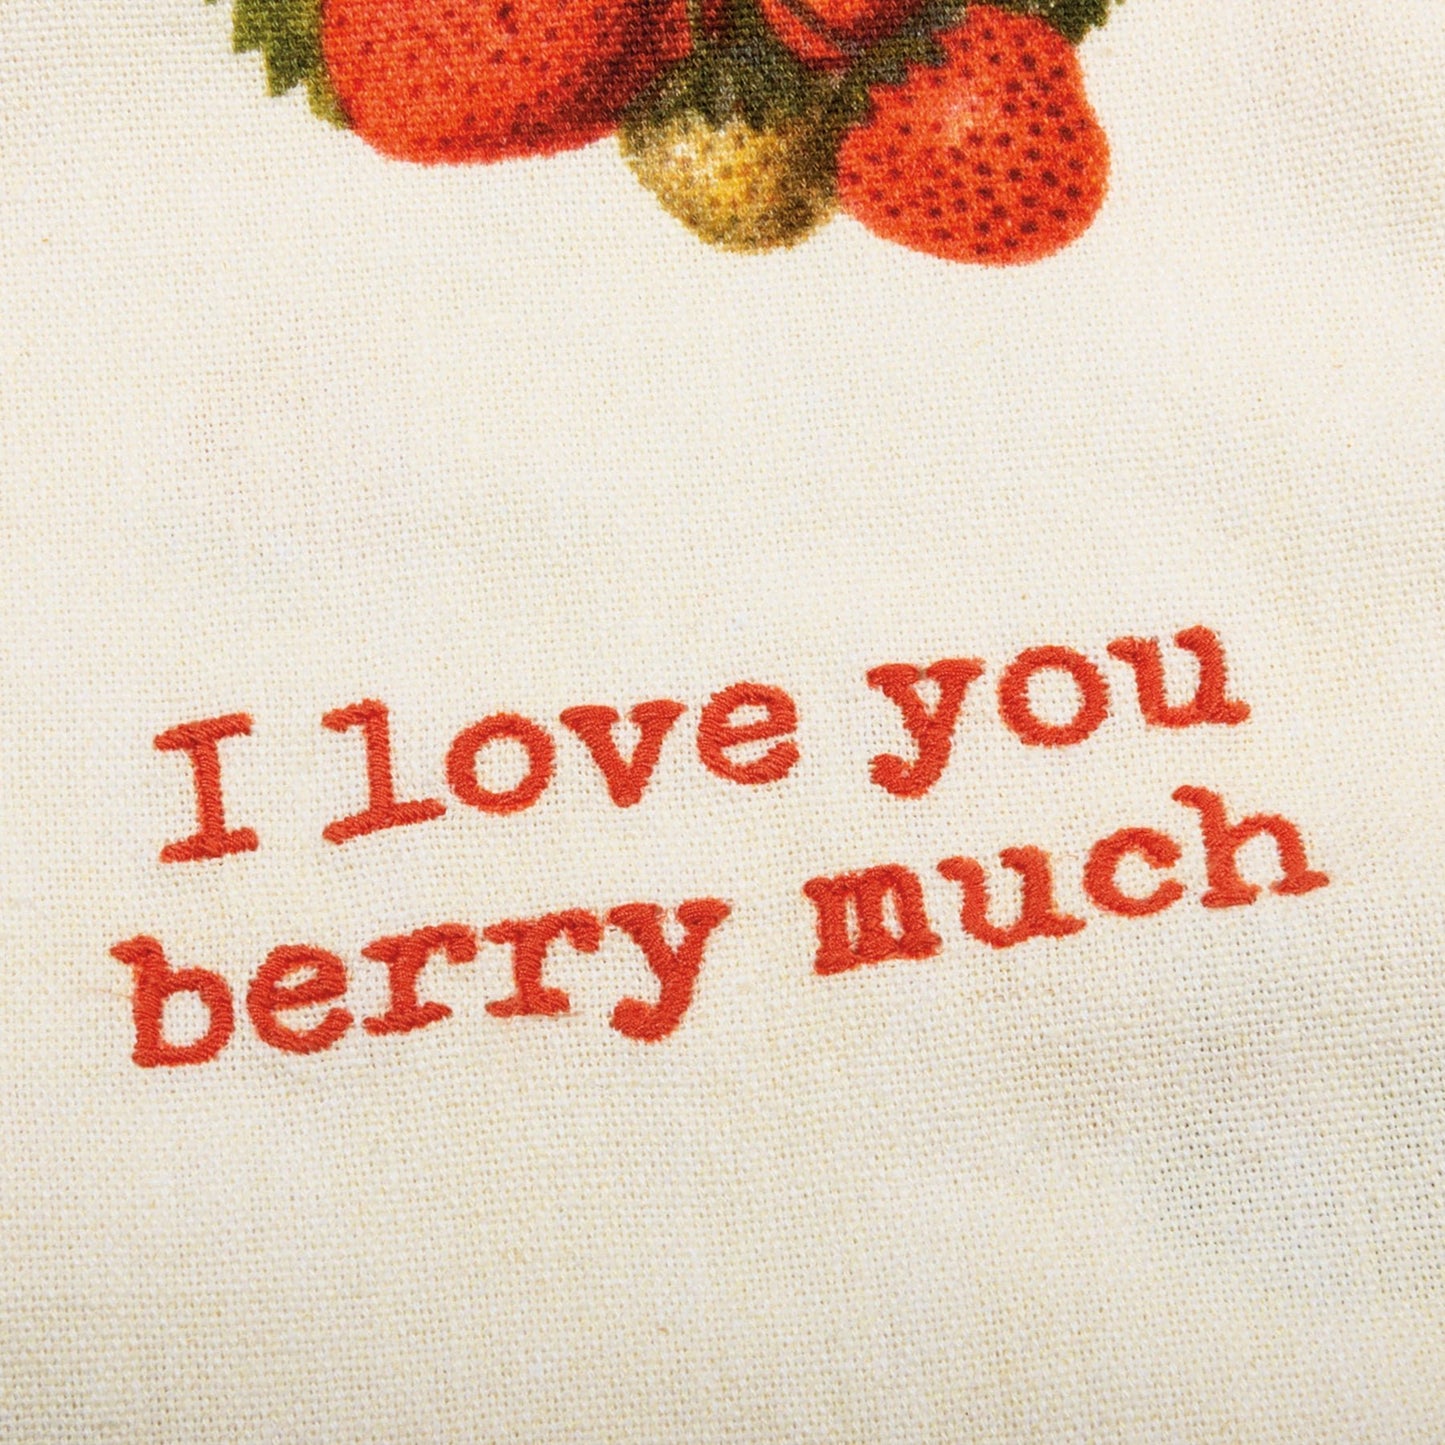 I Love You Berry Much Kitchen Garden Tea Towel - Marmalade Mercantile